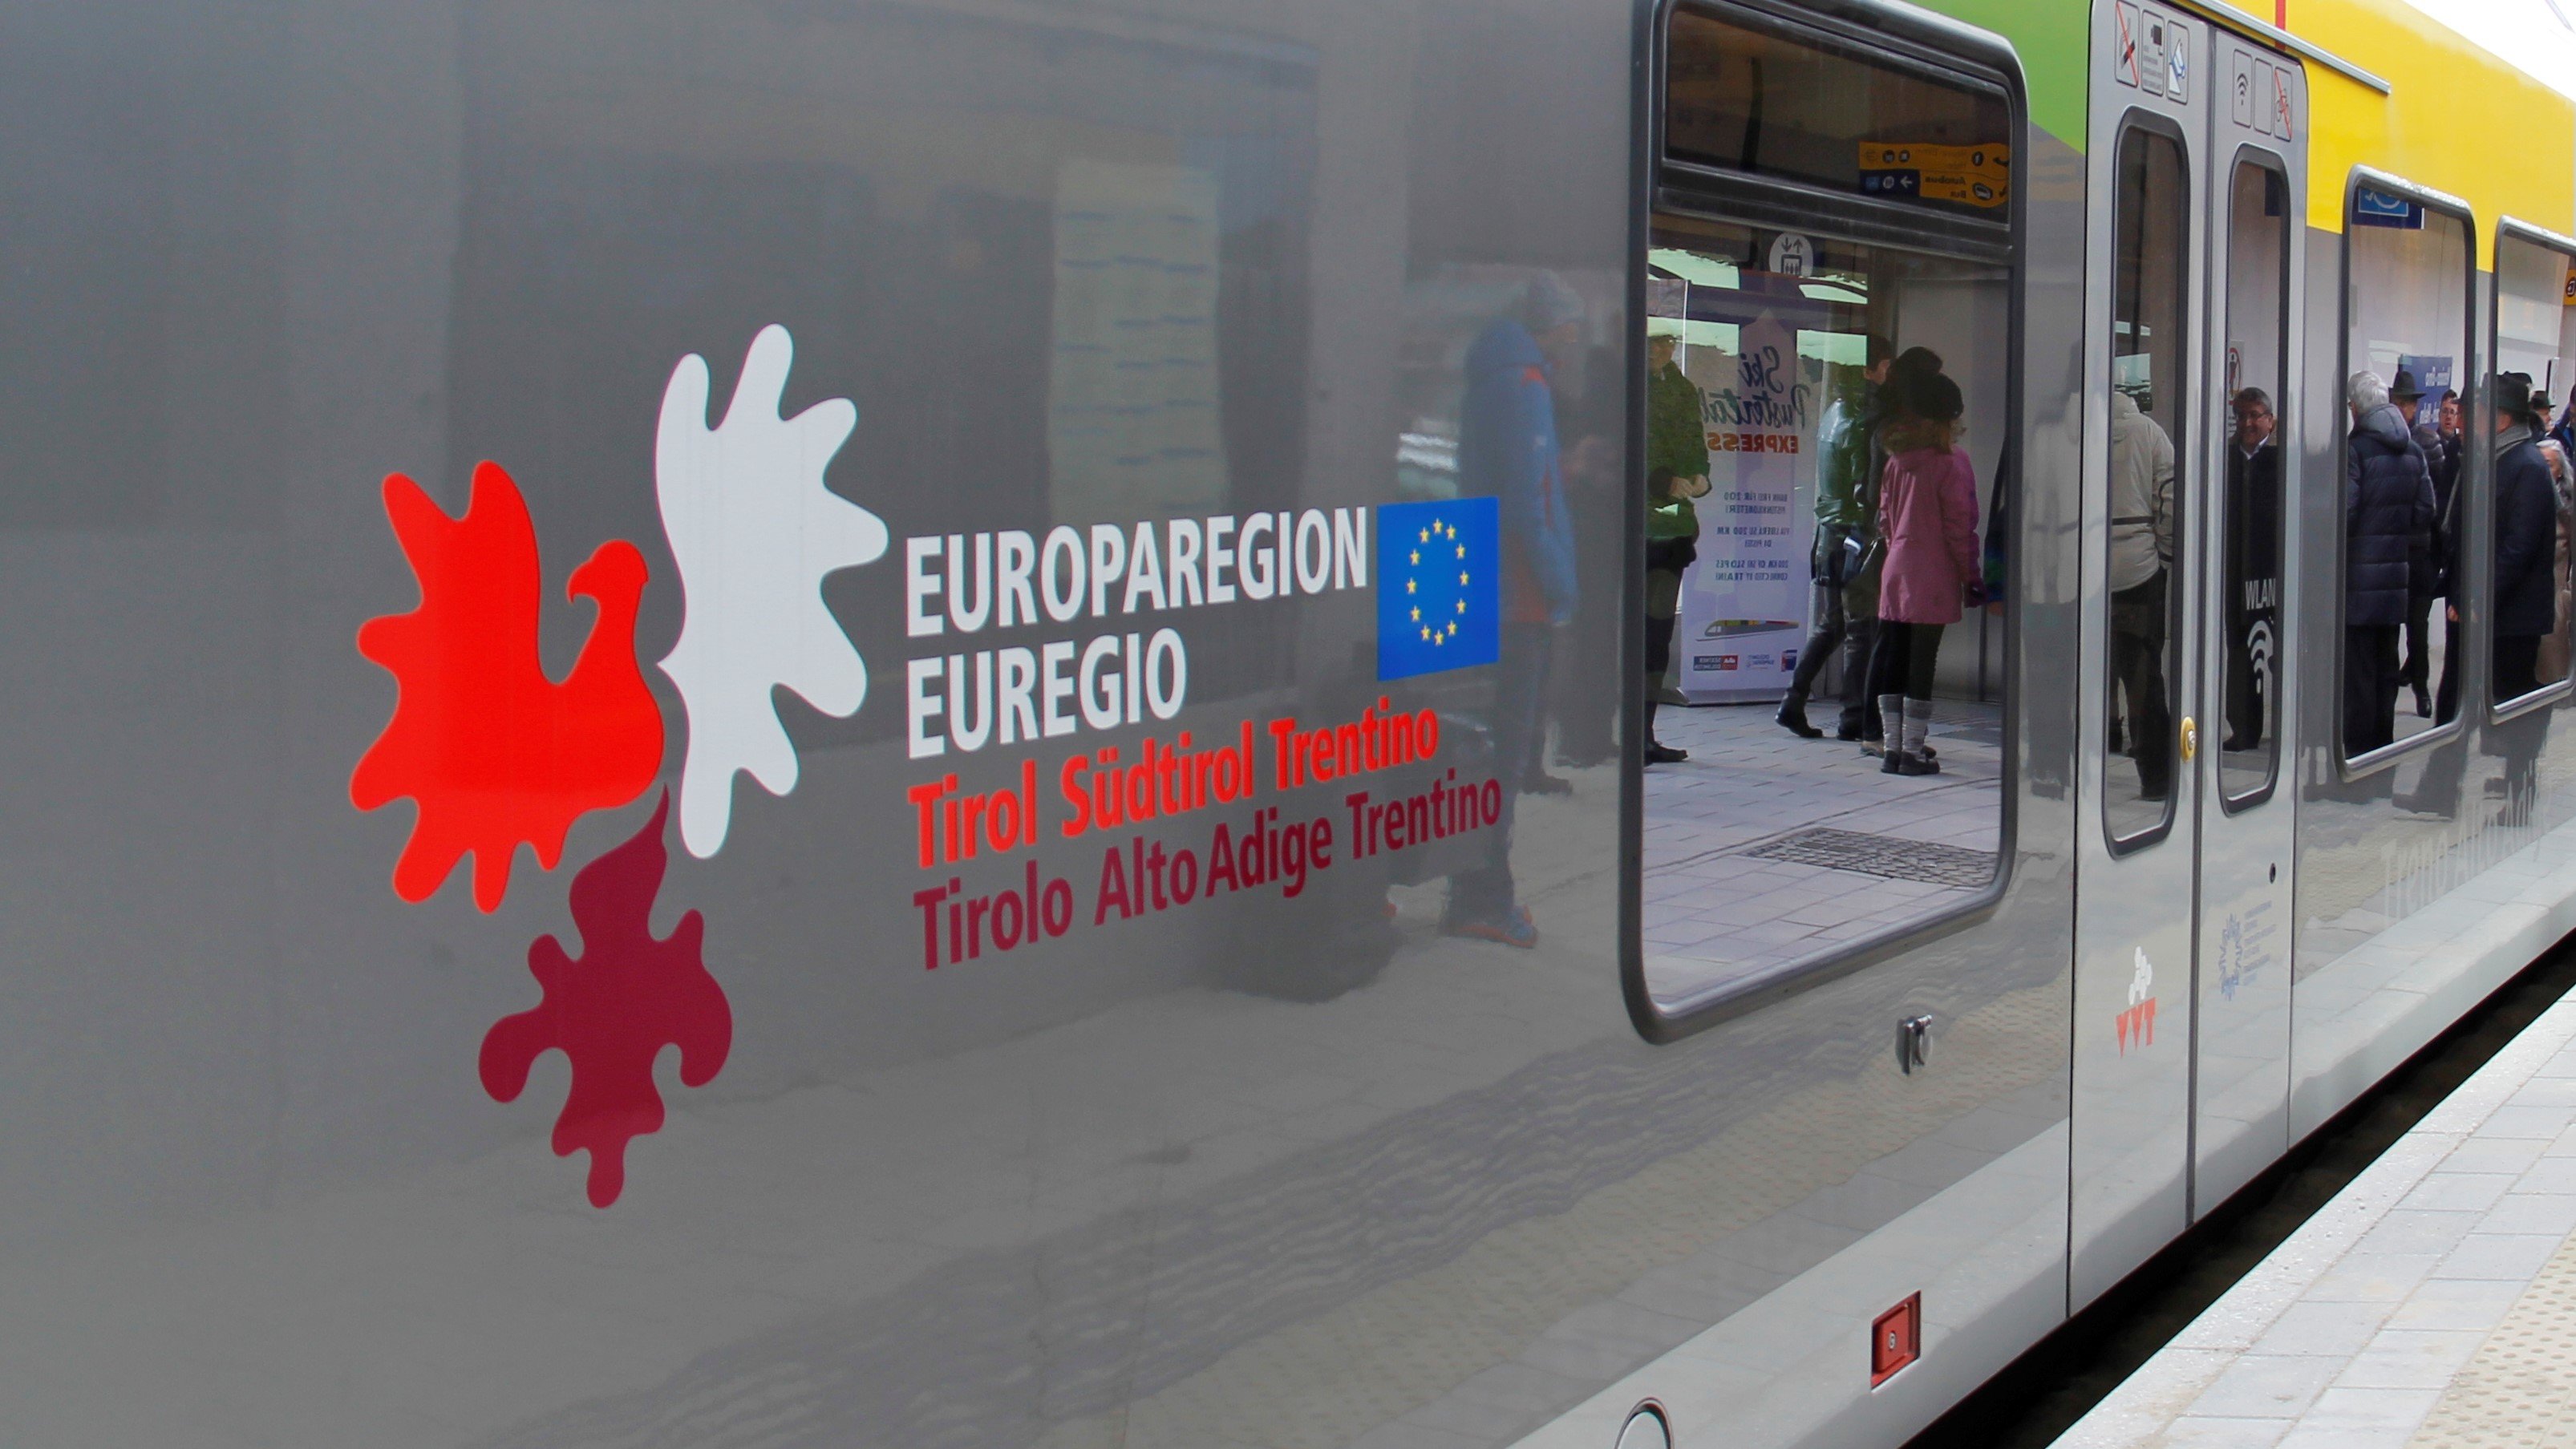 Train with Euregio Logo